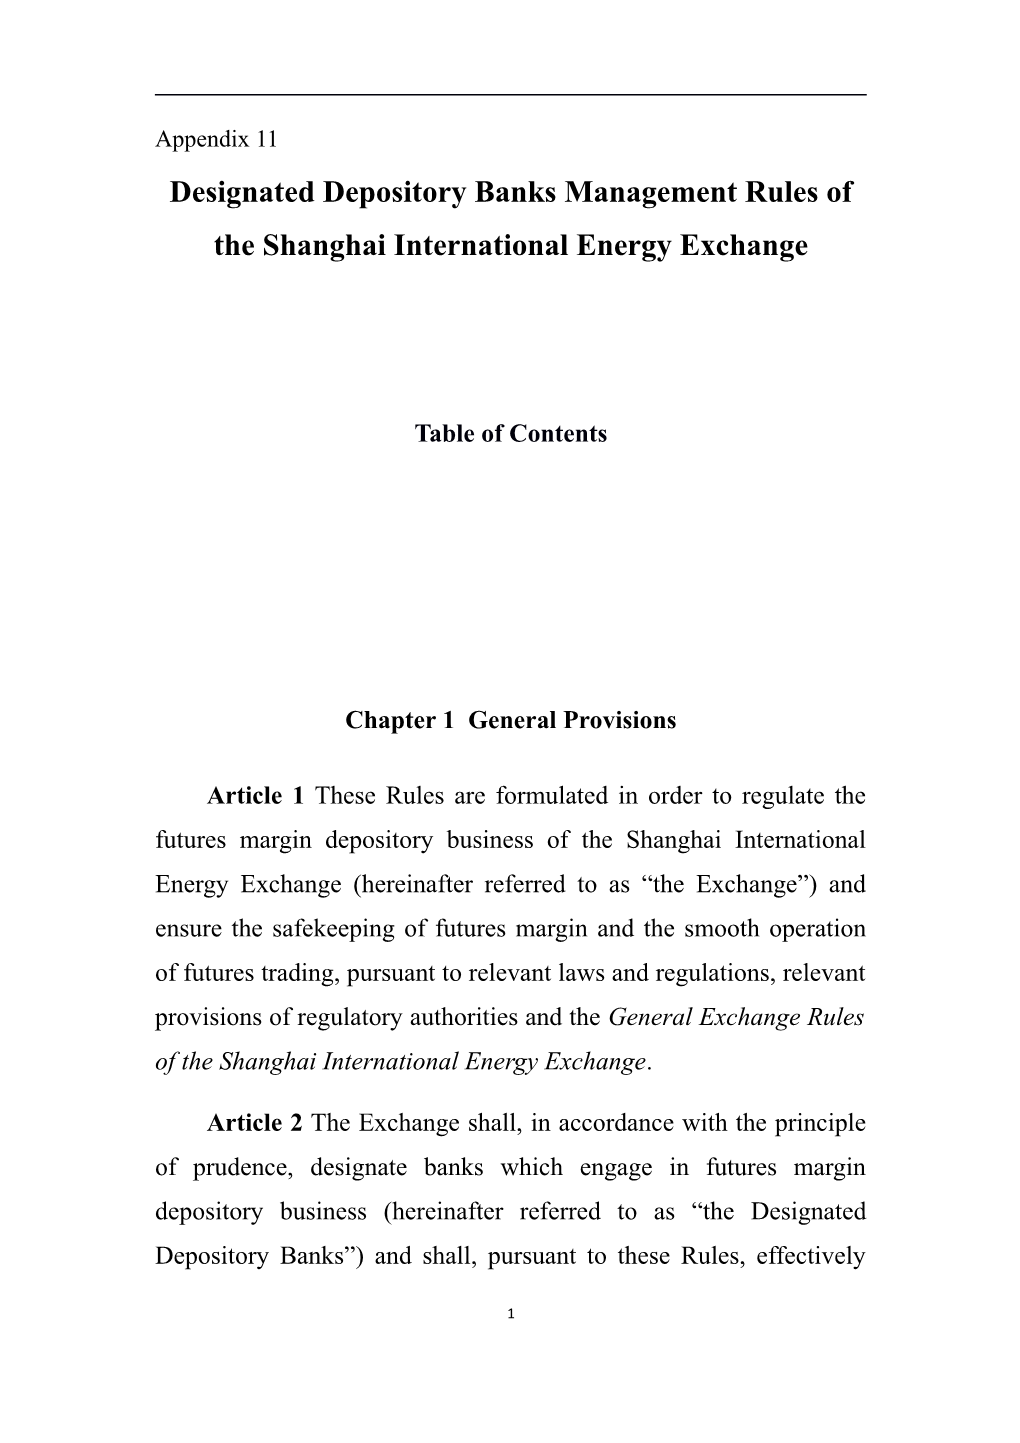 Designated Settlement Banks Management Rules of the Shanghai International Energy Exchange